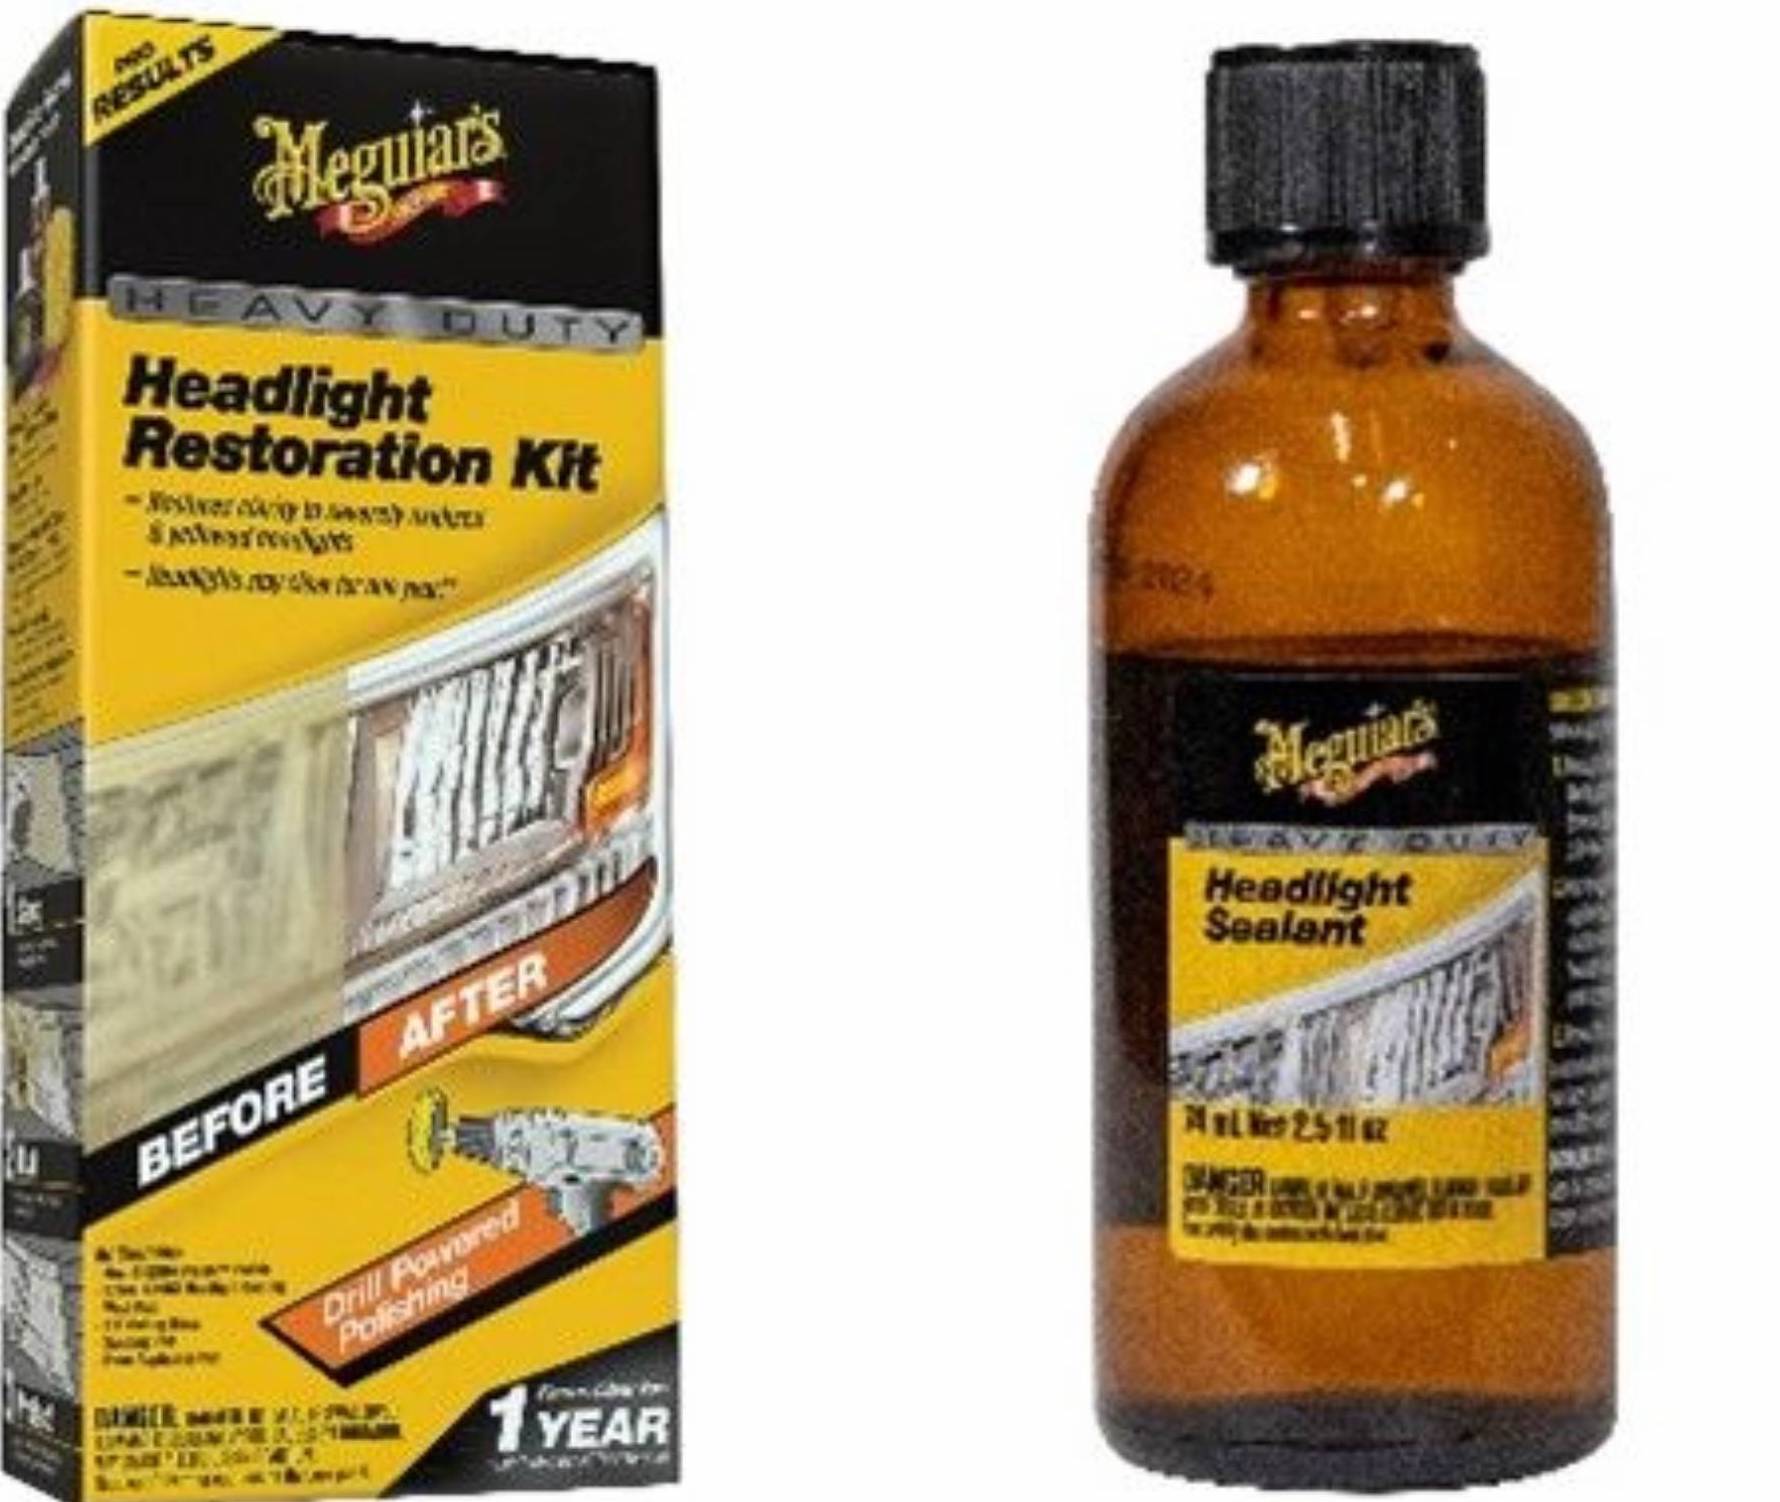 Review: Meguiar's Heavy Duty Headlight Restoration Kit 